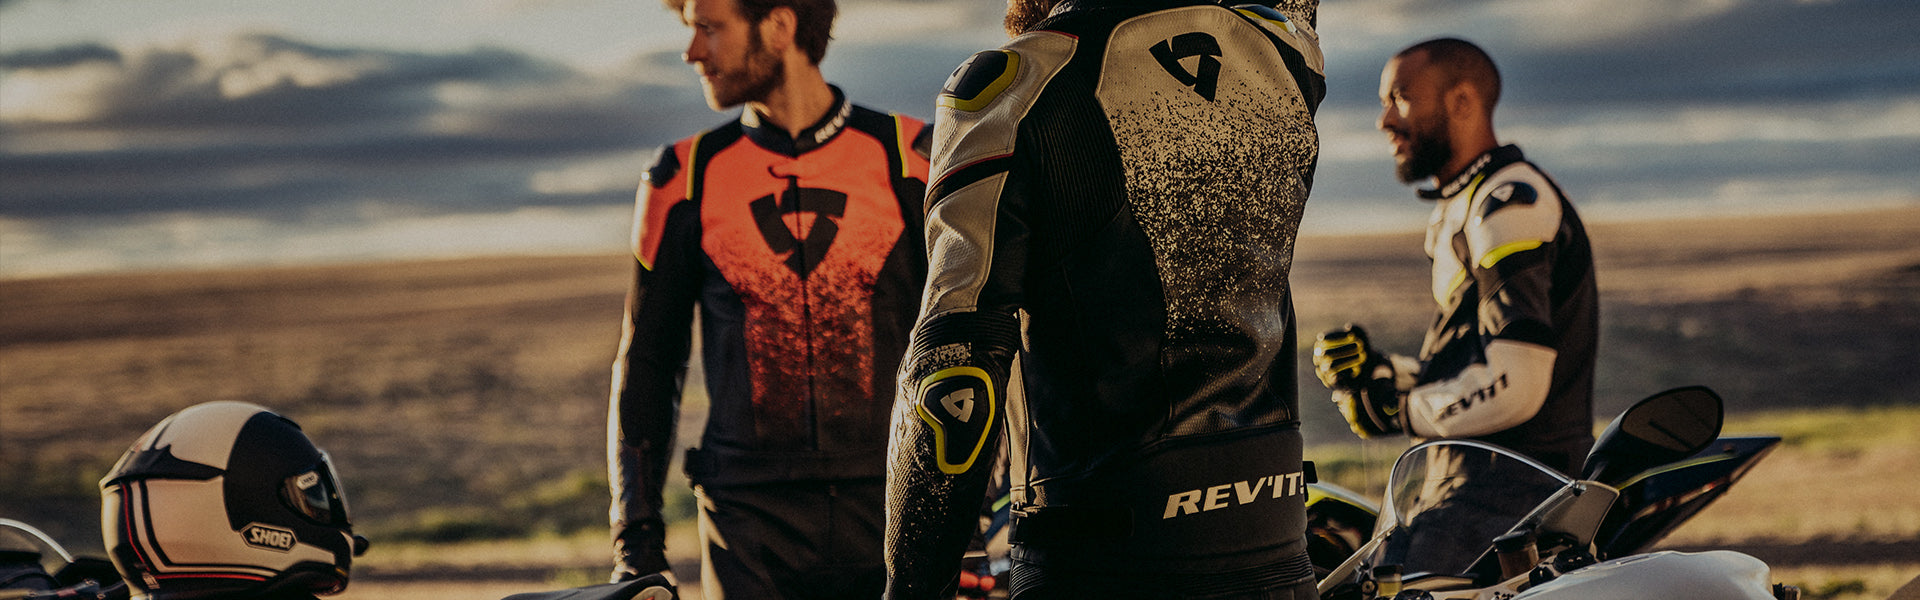 Rev'it! - Excellerator 2 motorcycle undersuit - Biker Outfit